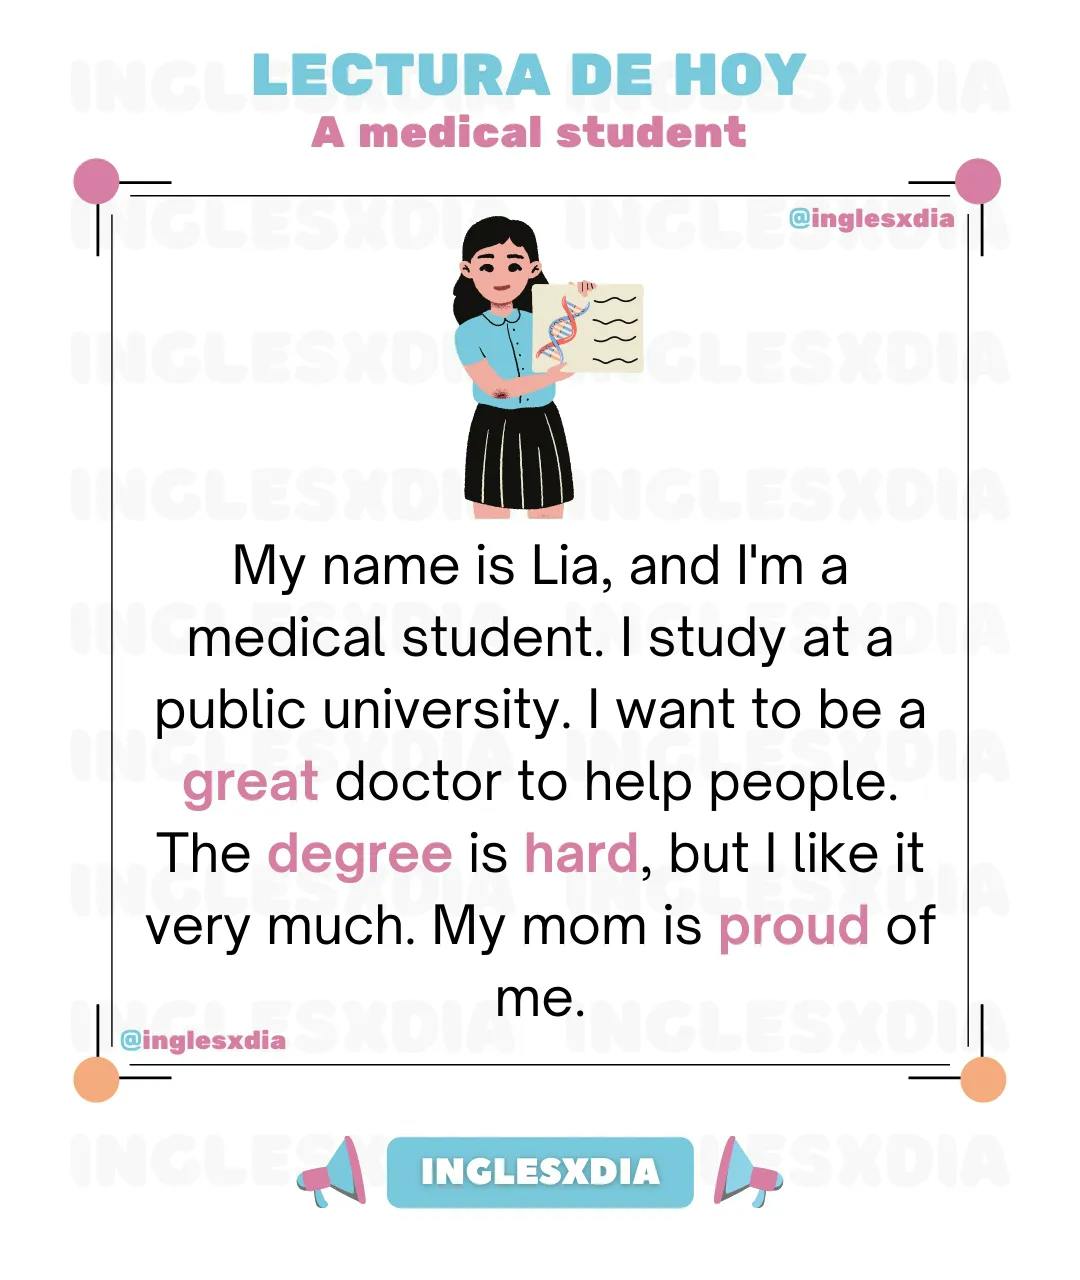 A medical student